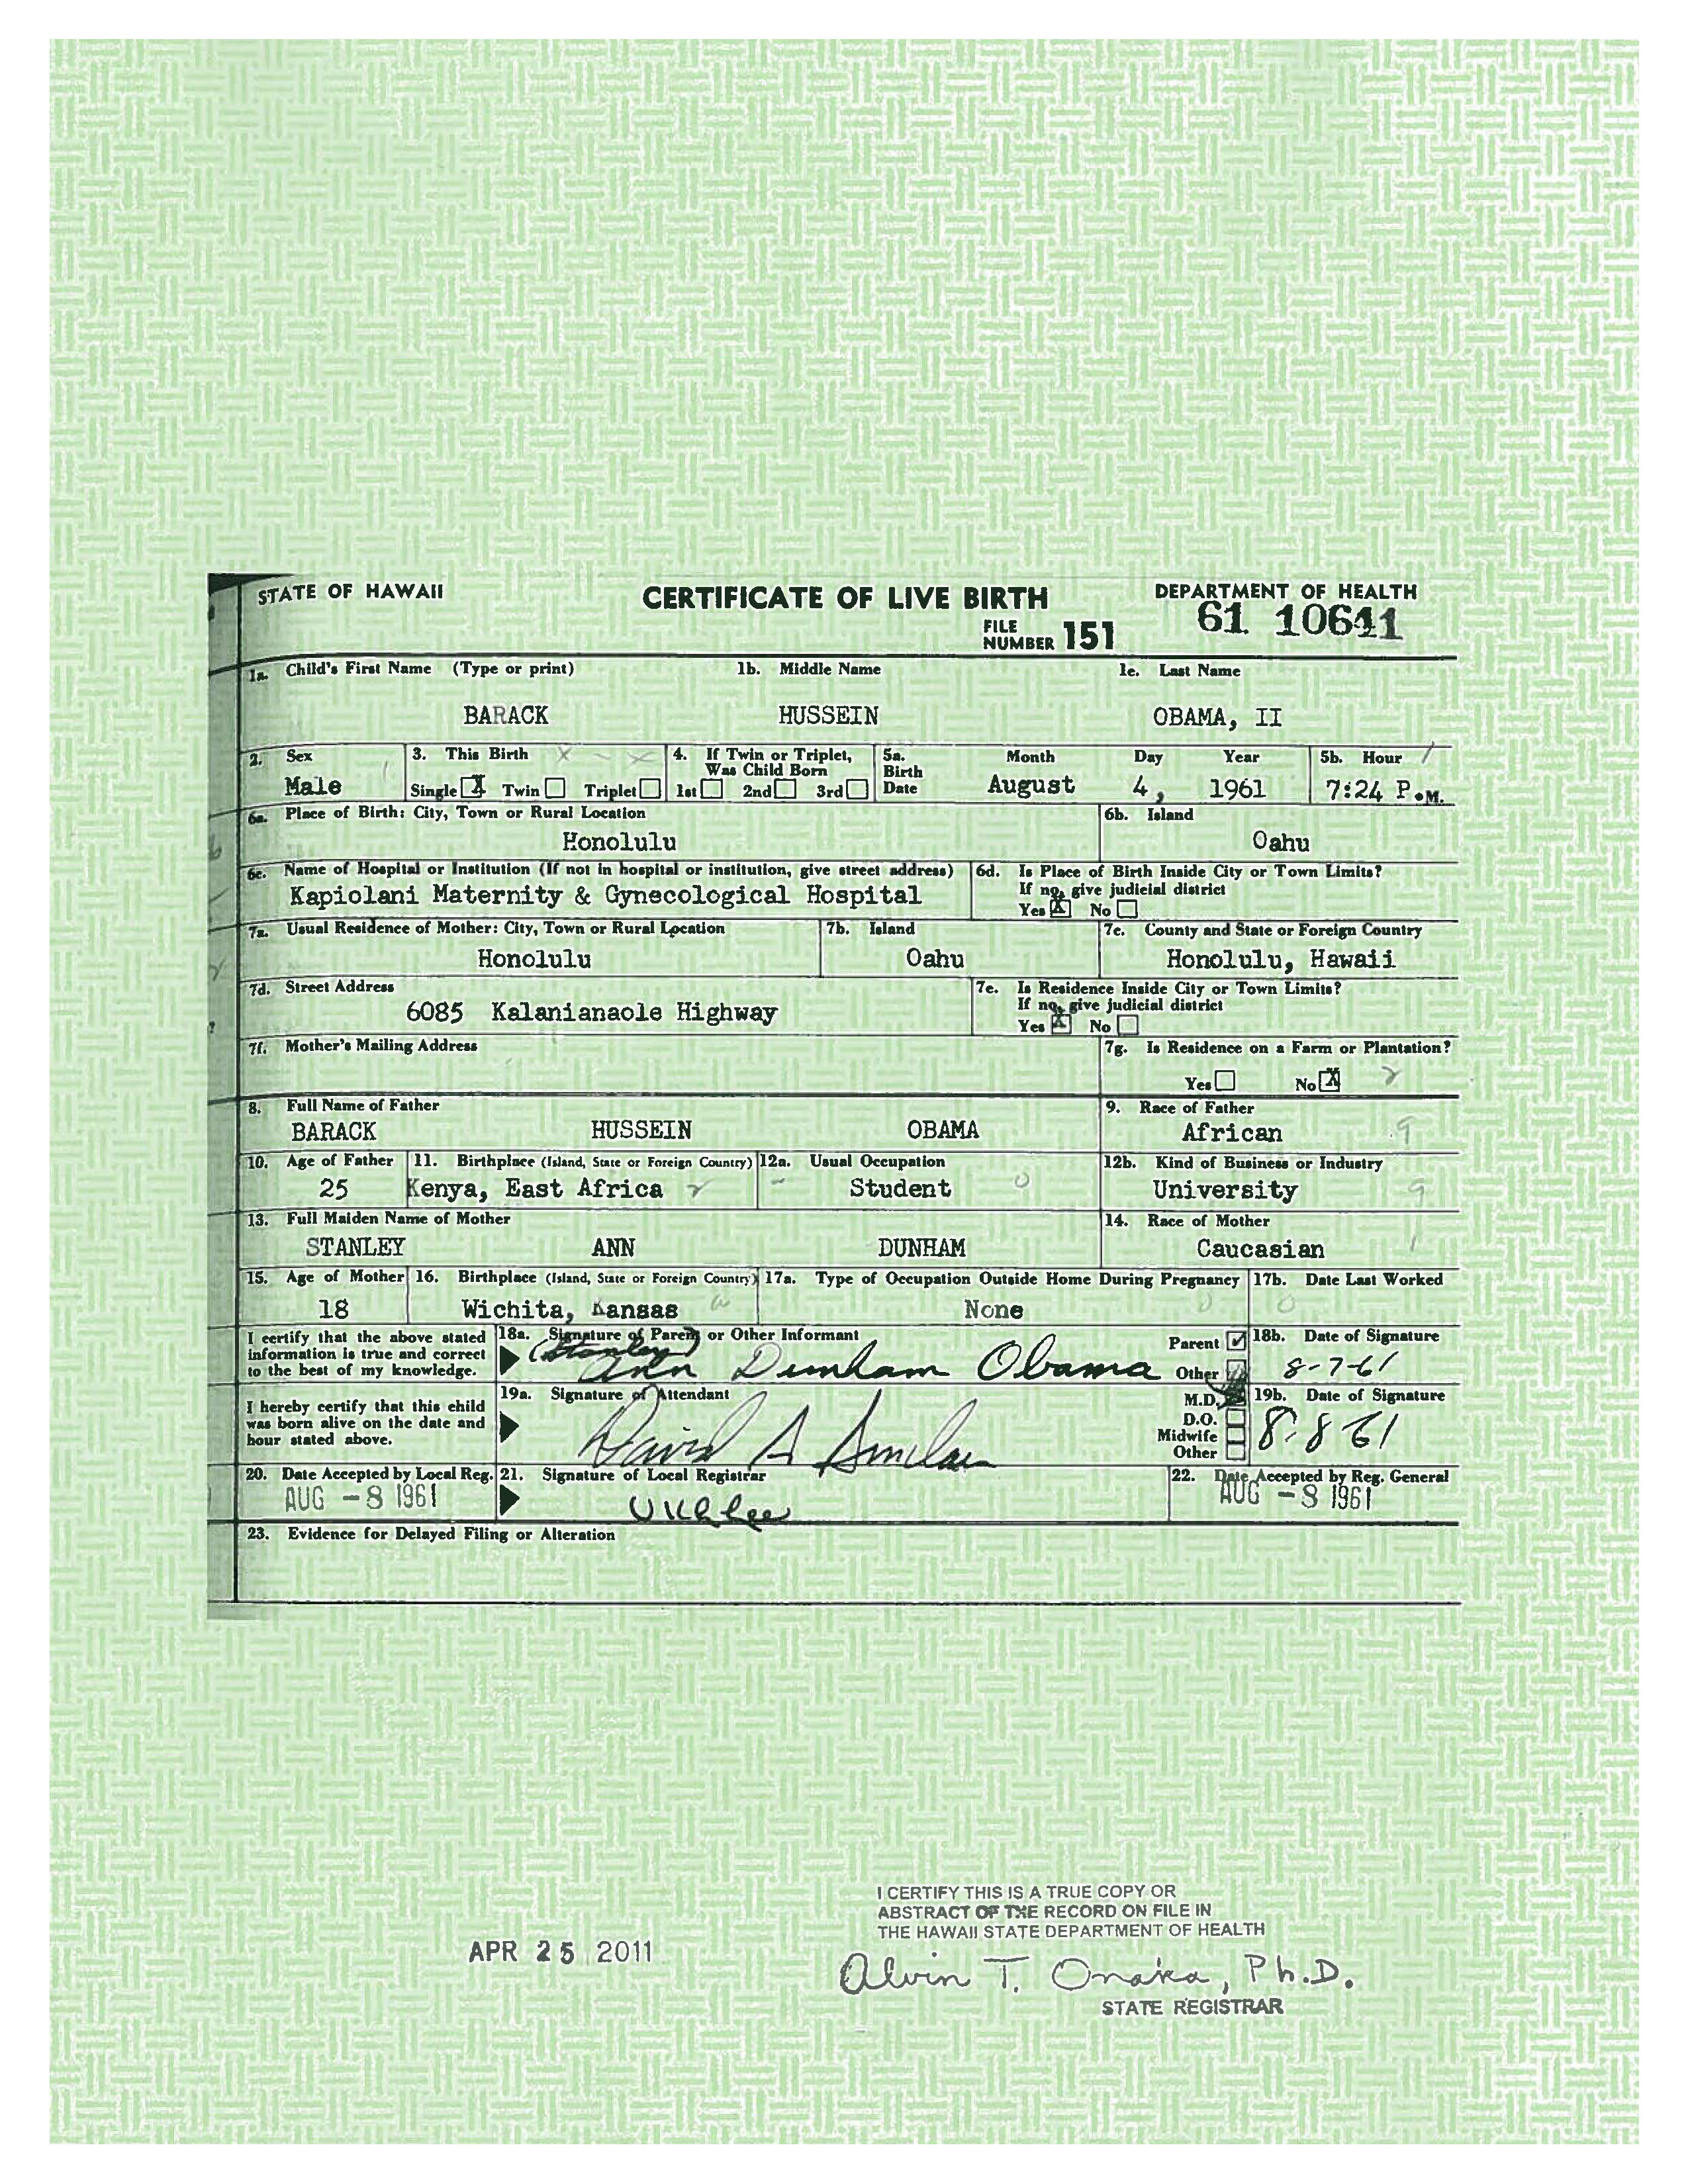 Barack Obama #39 s Long Form Birth Certificate Public Intelligence